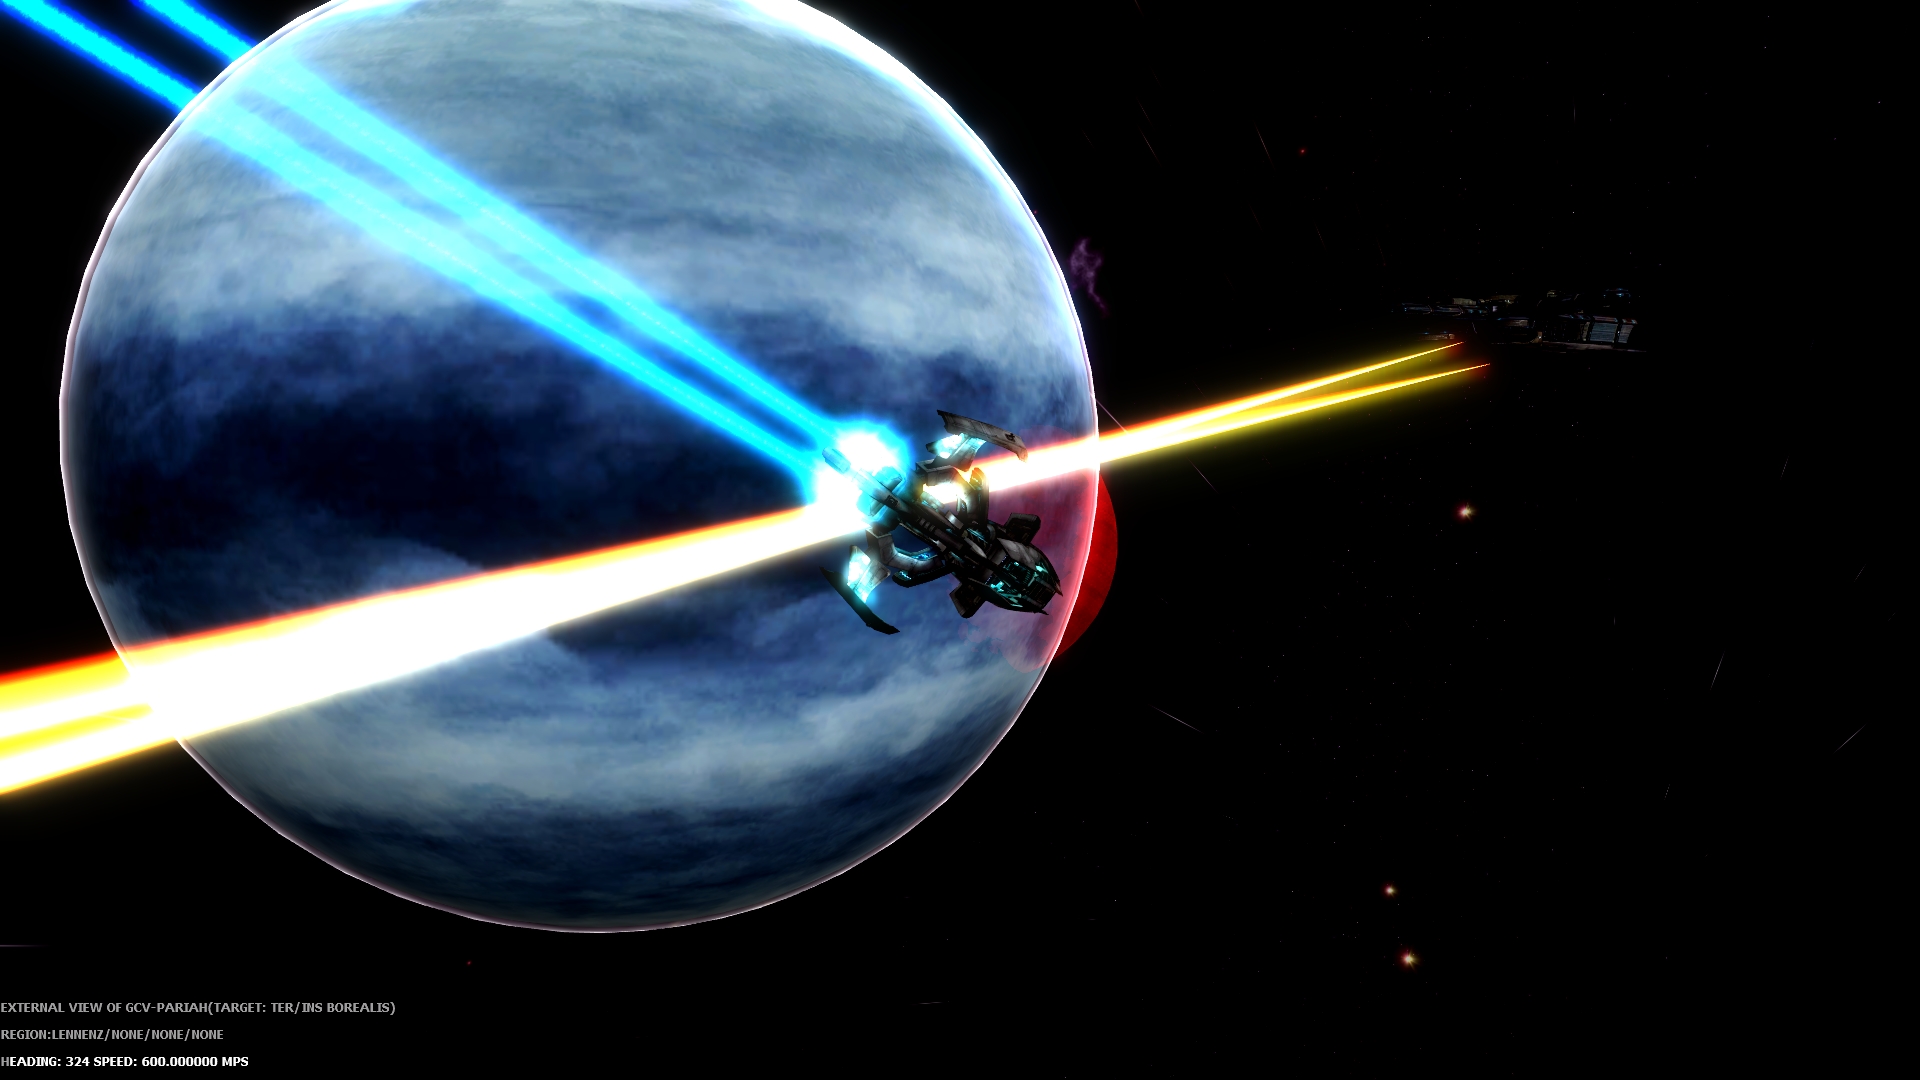 Universal Combat CE screenshot